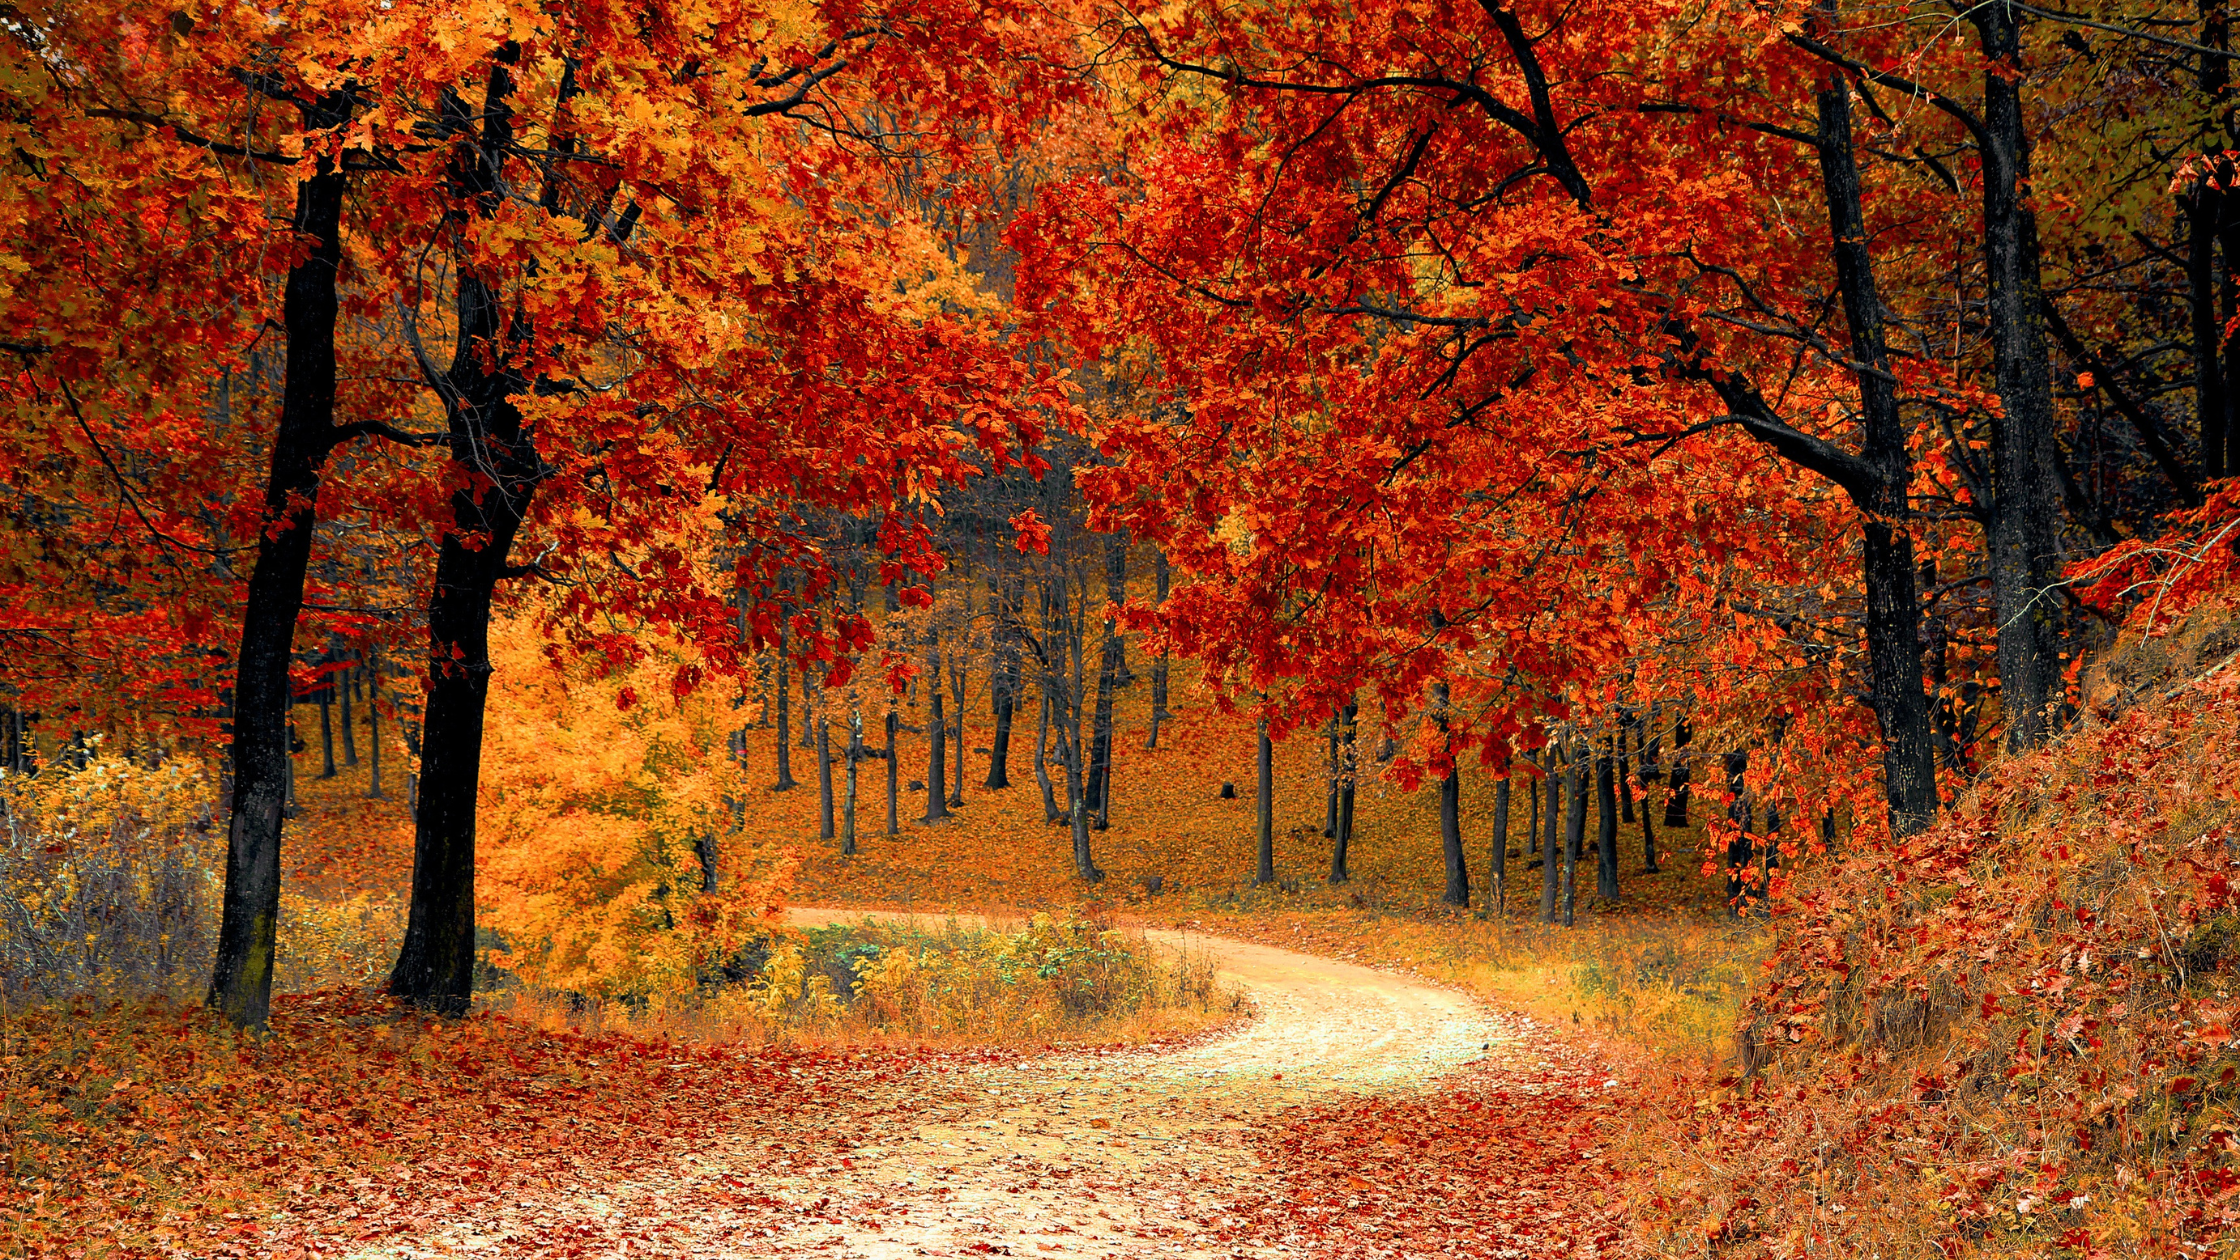 Autumn Tree Study Workbook and Scavenger Hunt